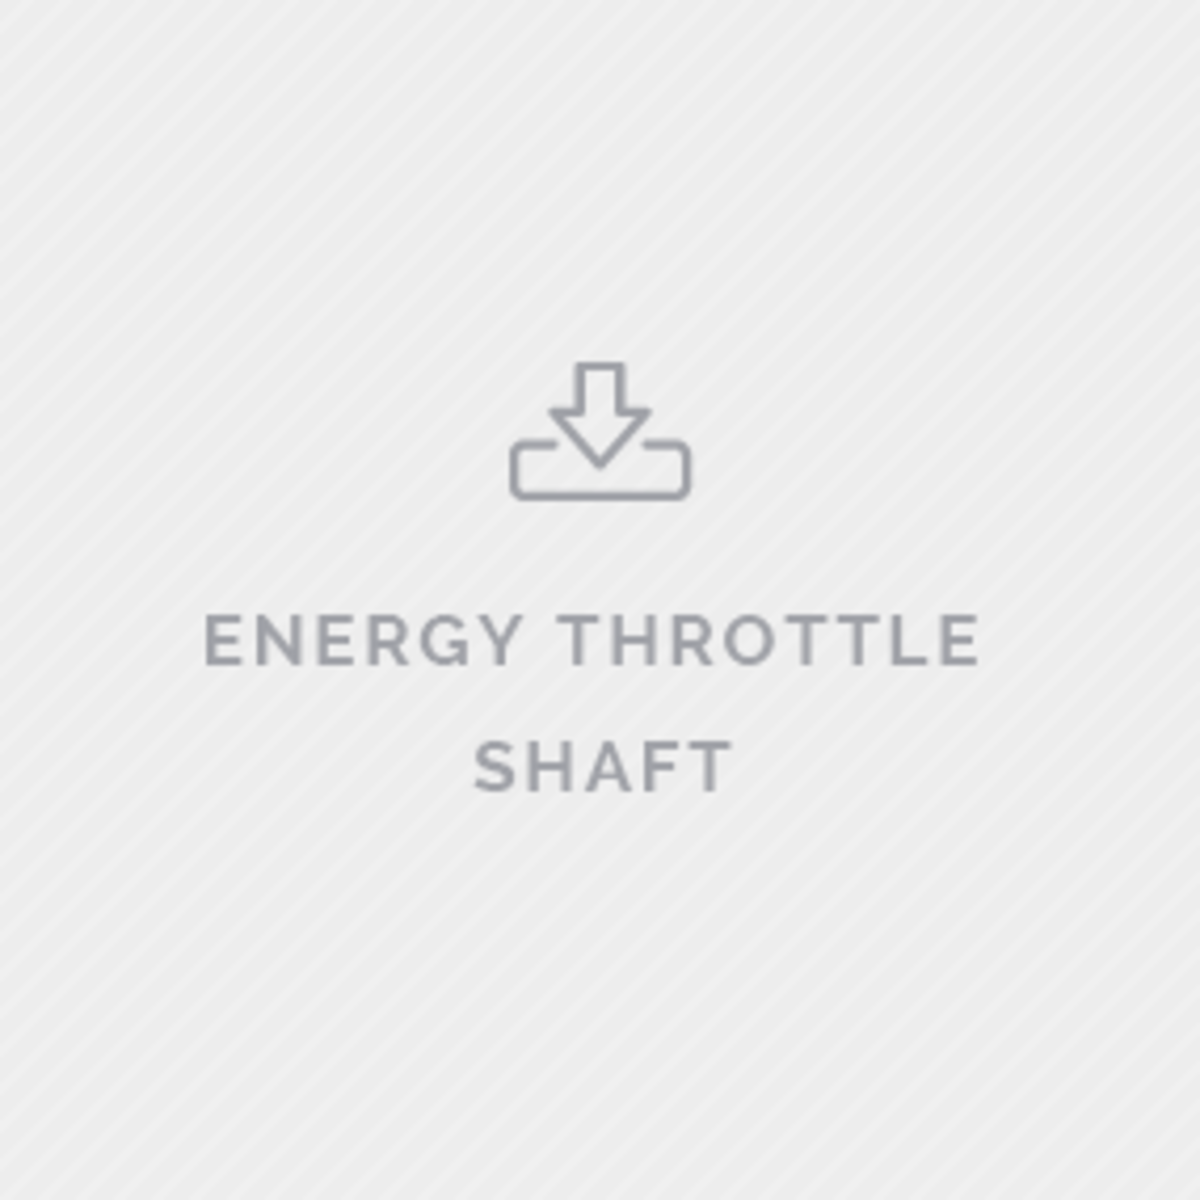 order form Energy throttle shaft